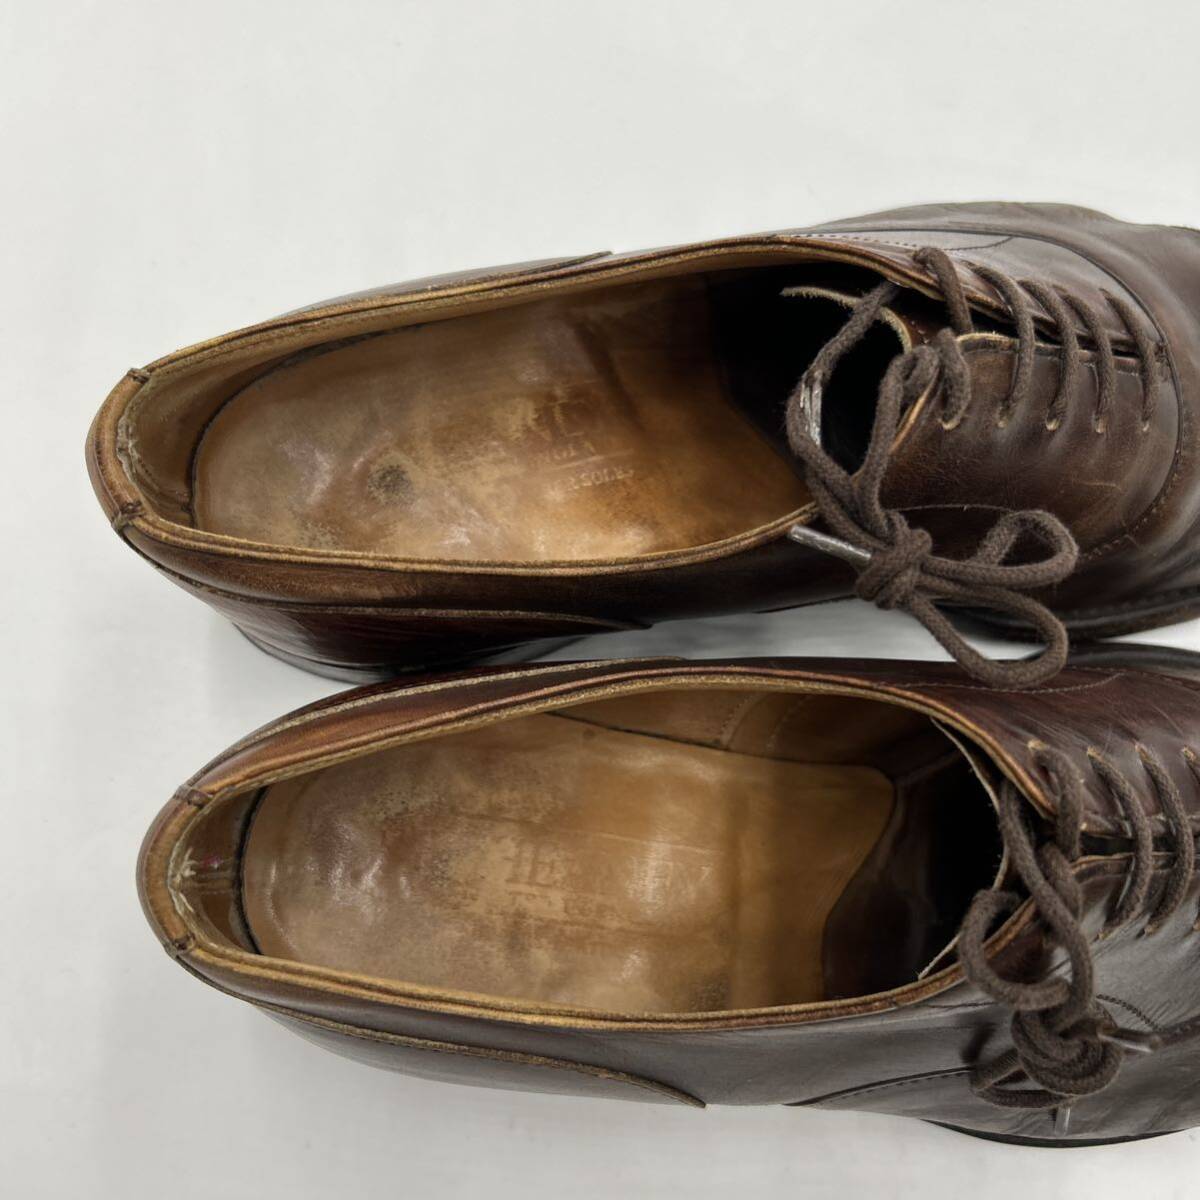 A ■ 英国製 '高級感溢れる' JOSEPH CHEANEY ジョセフチーニー 本革 ビジネスシューズ 革靴 US6 24cm 紳士靴 ストレートチップ 内羽根式 の画像8